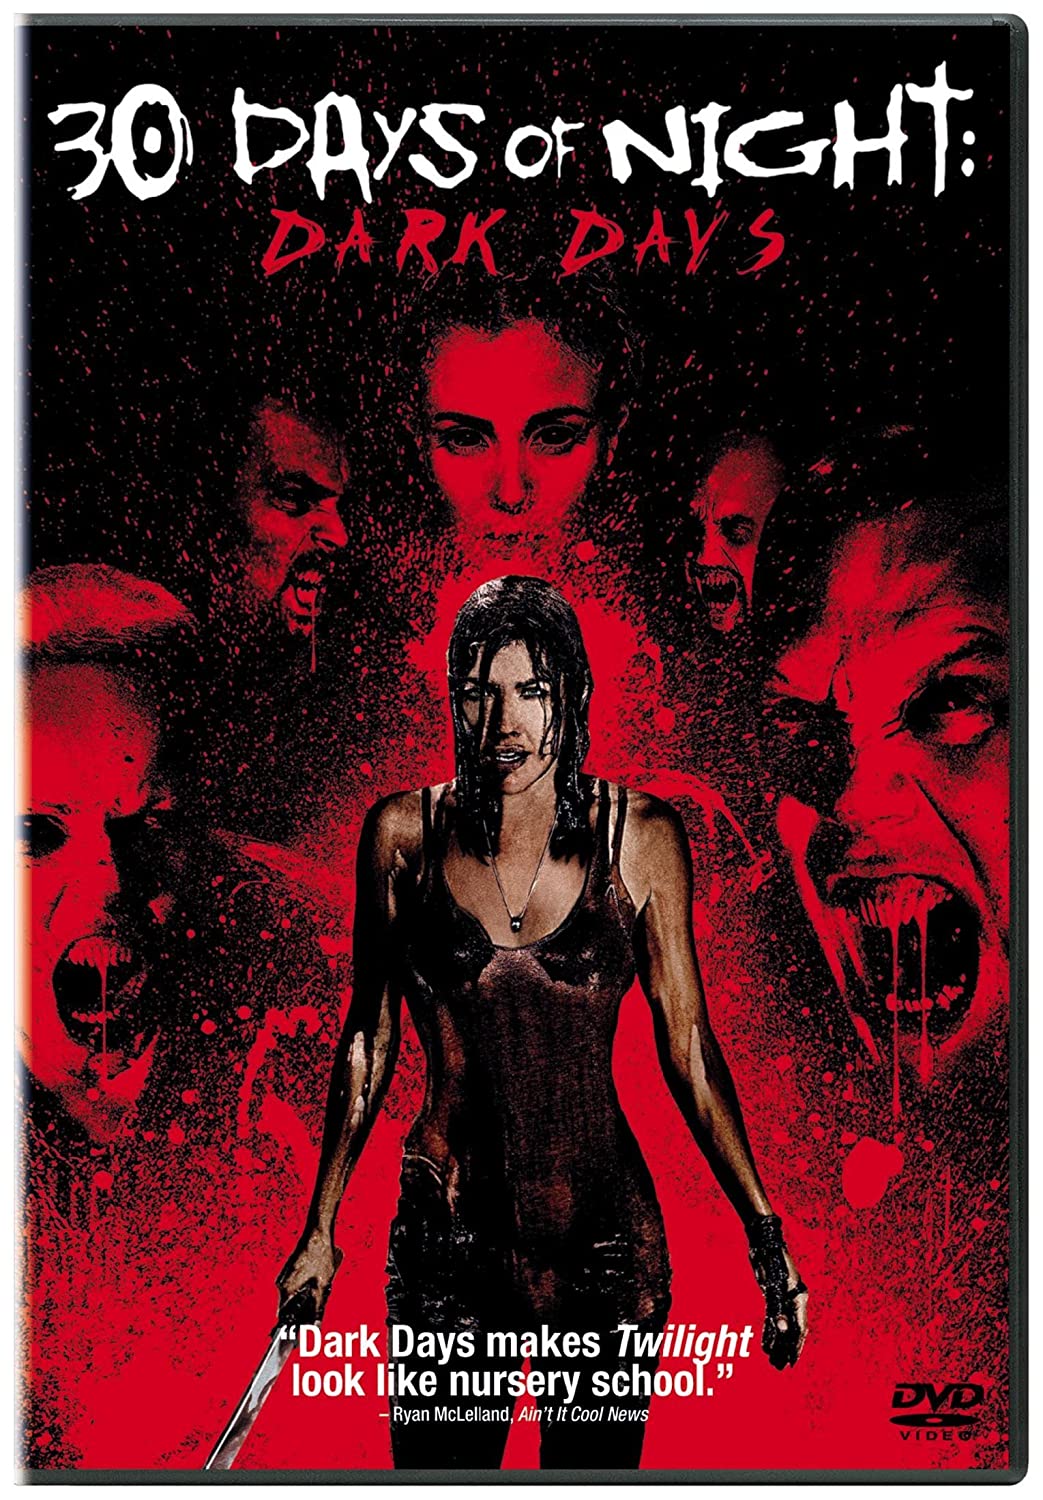 30 Days Of Night: Dark Days - Darkside Records